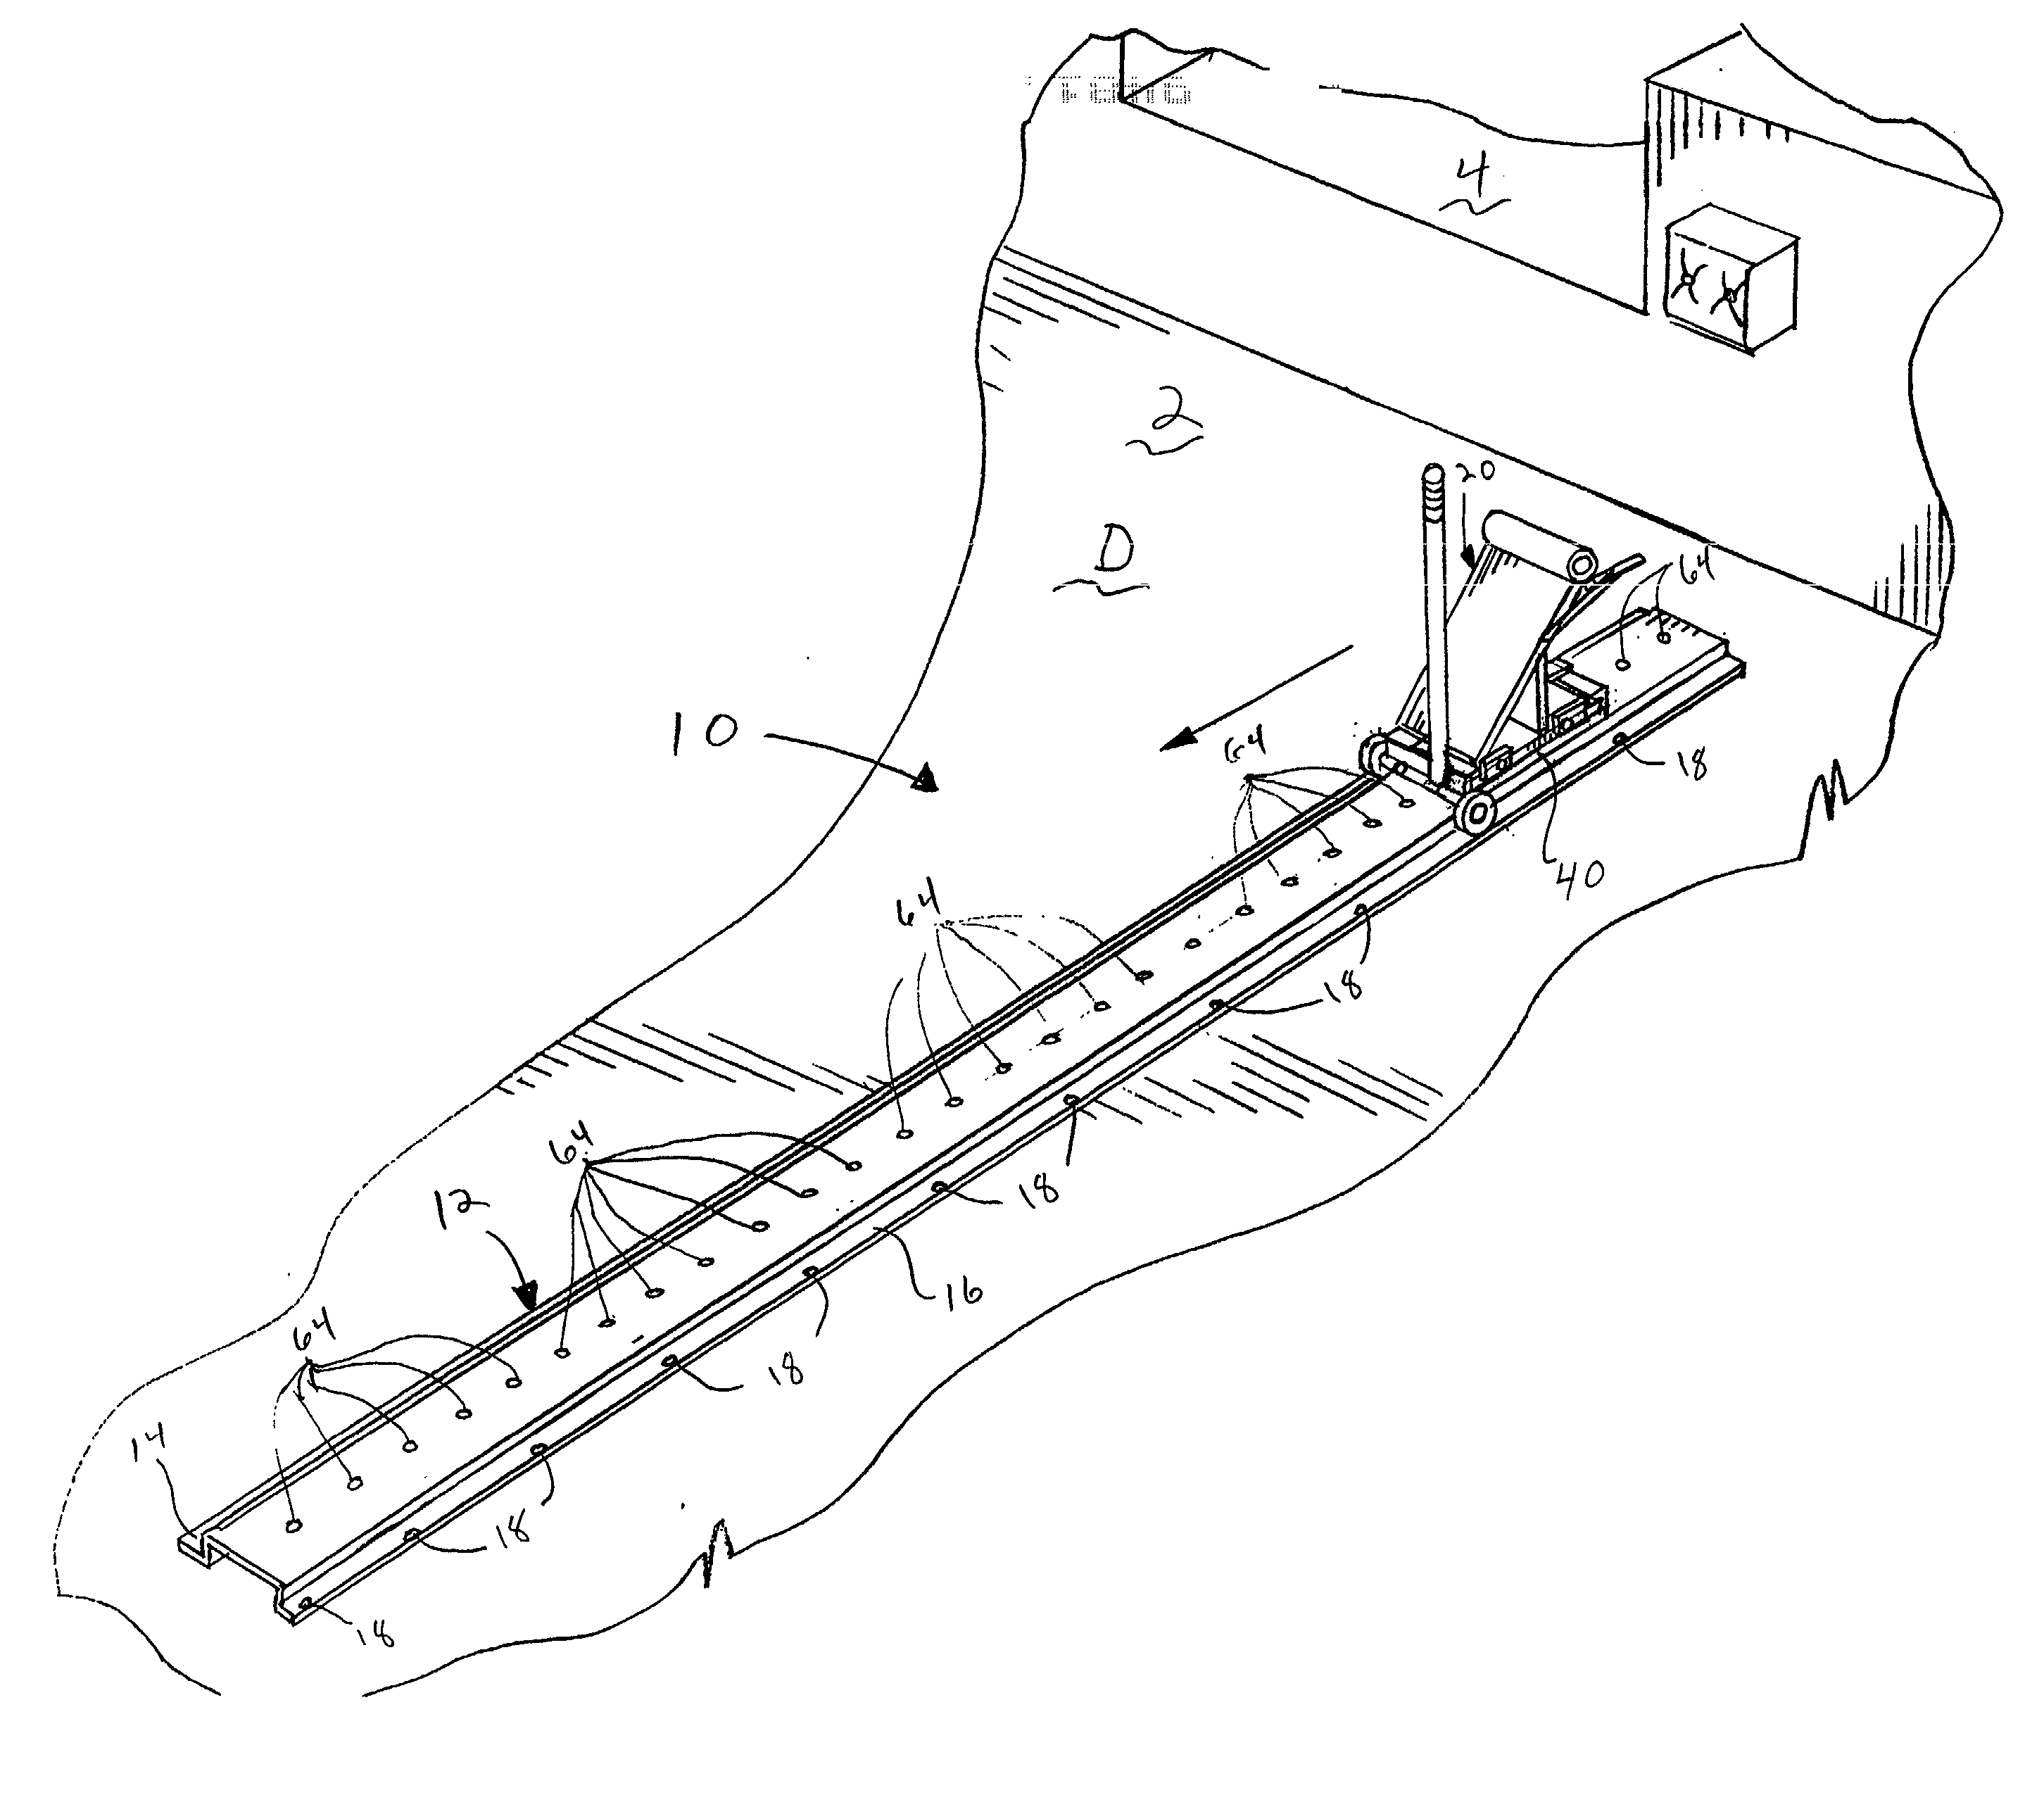 Manually positioned wheel chocking apparatus